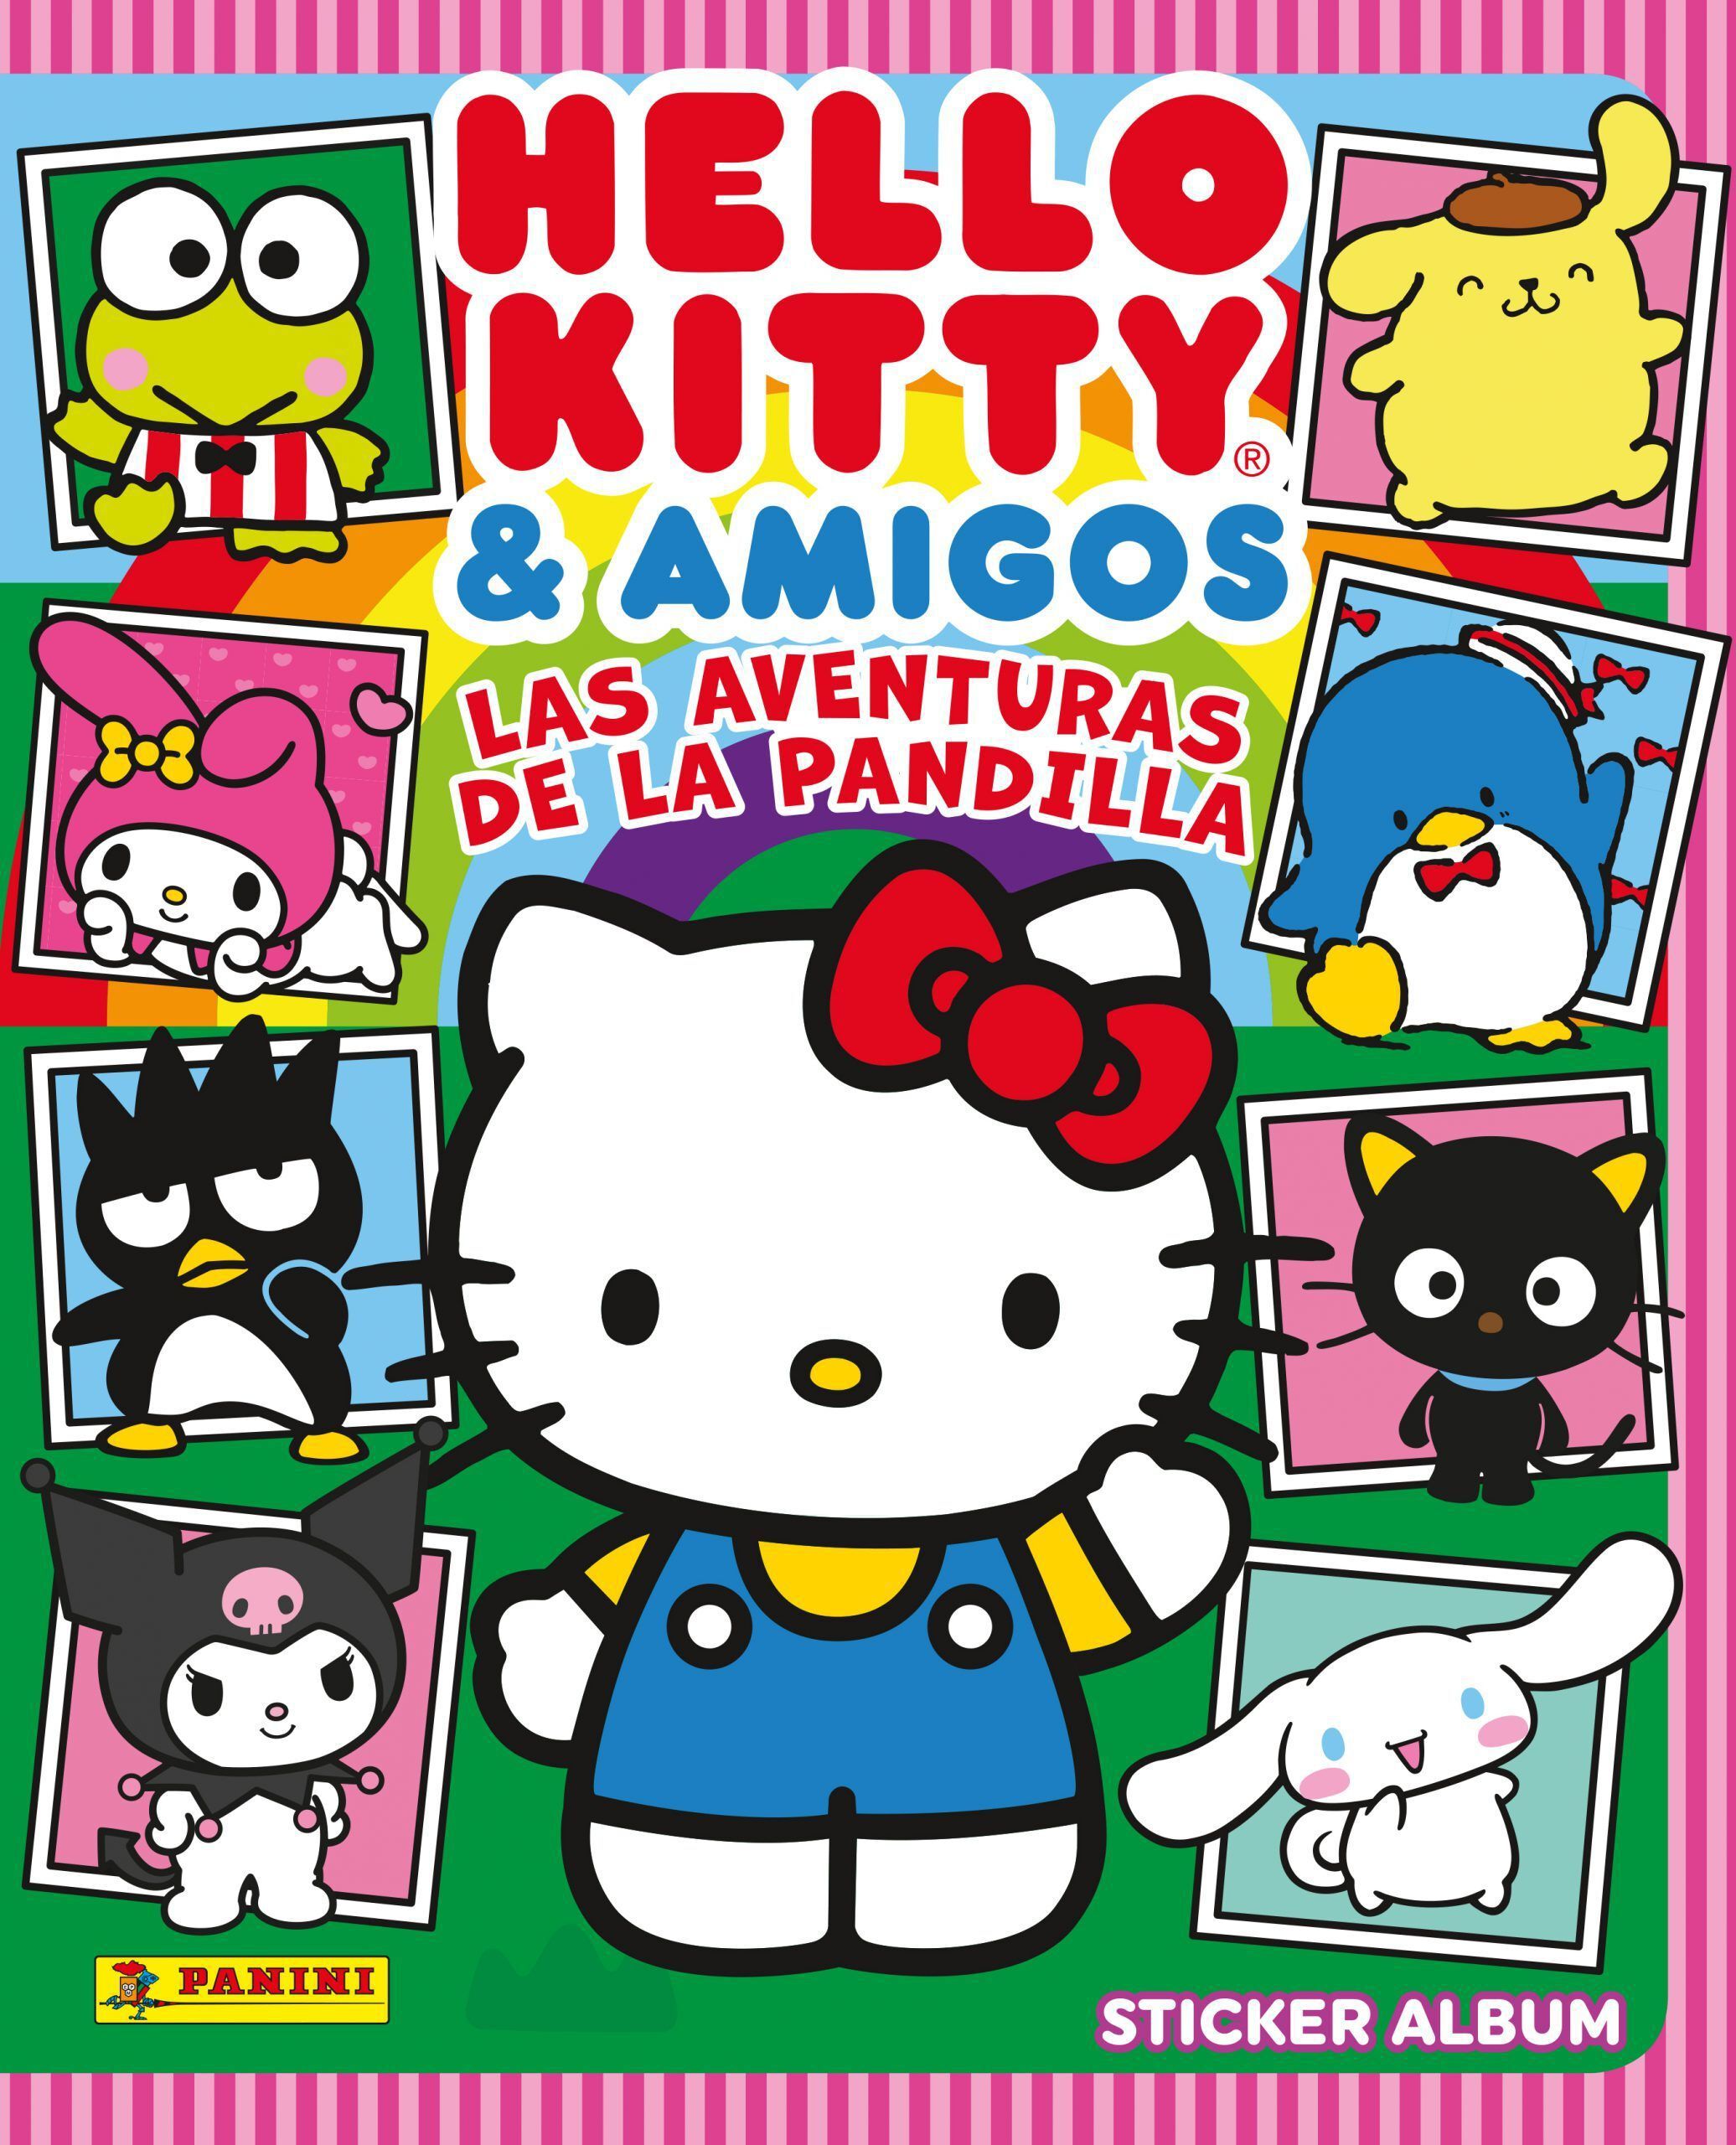 Donde comprar sticker vinilo forma de hello kitty colores 2 en Chile